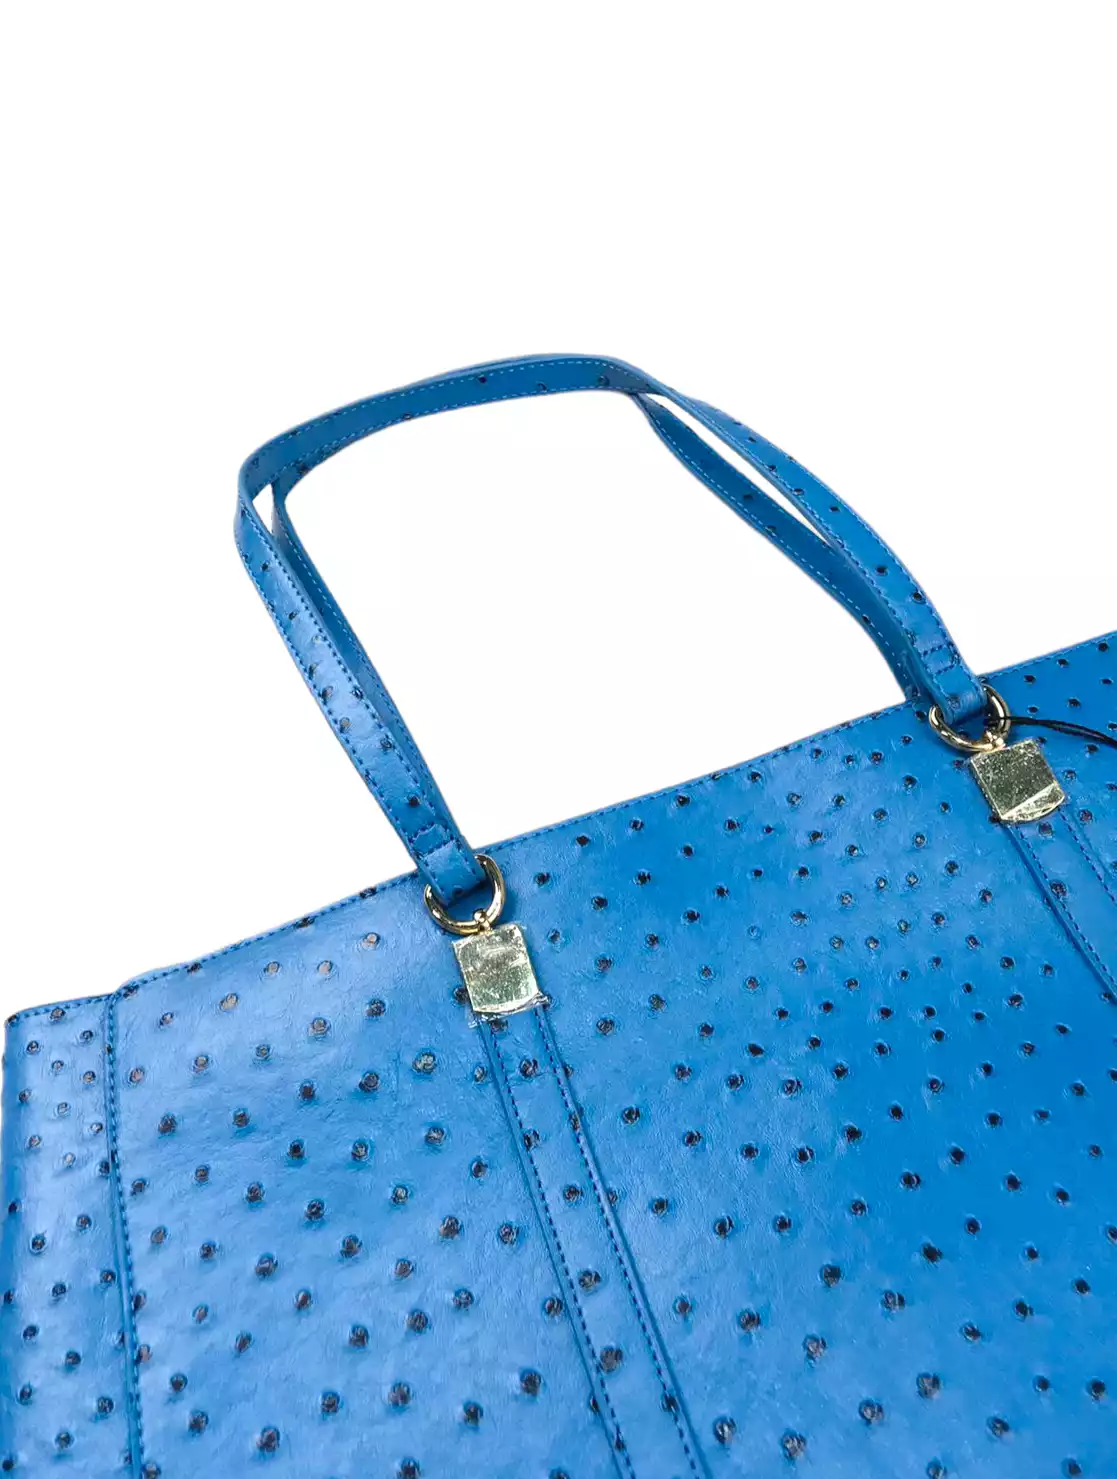 Handbag by Carpisa